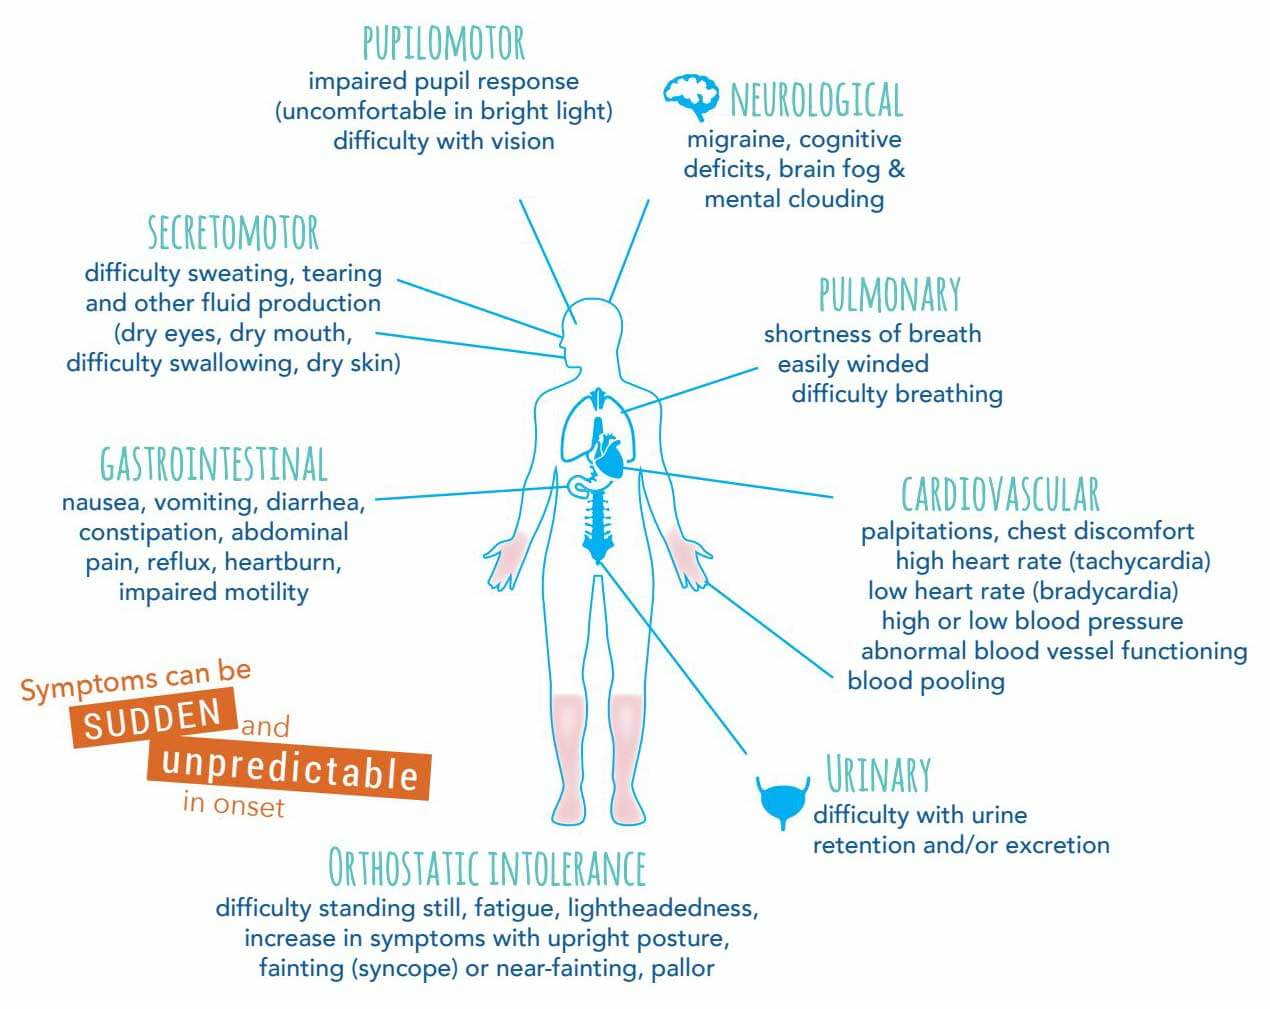 Symptoms of Postural Orthostatic Tachycardia Syndrome (POTS